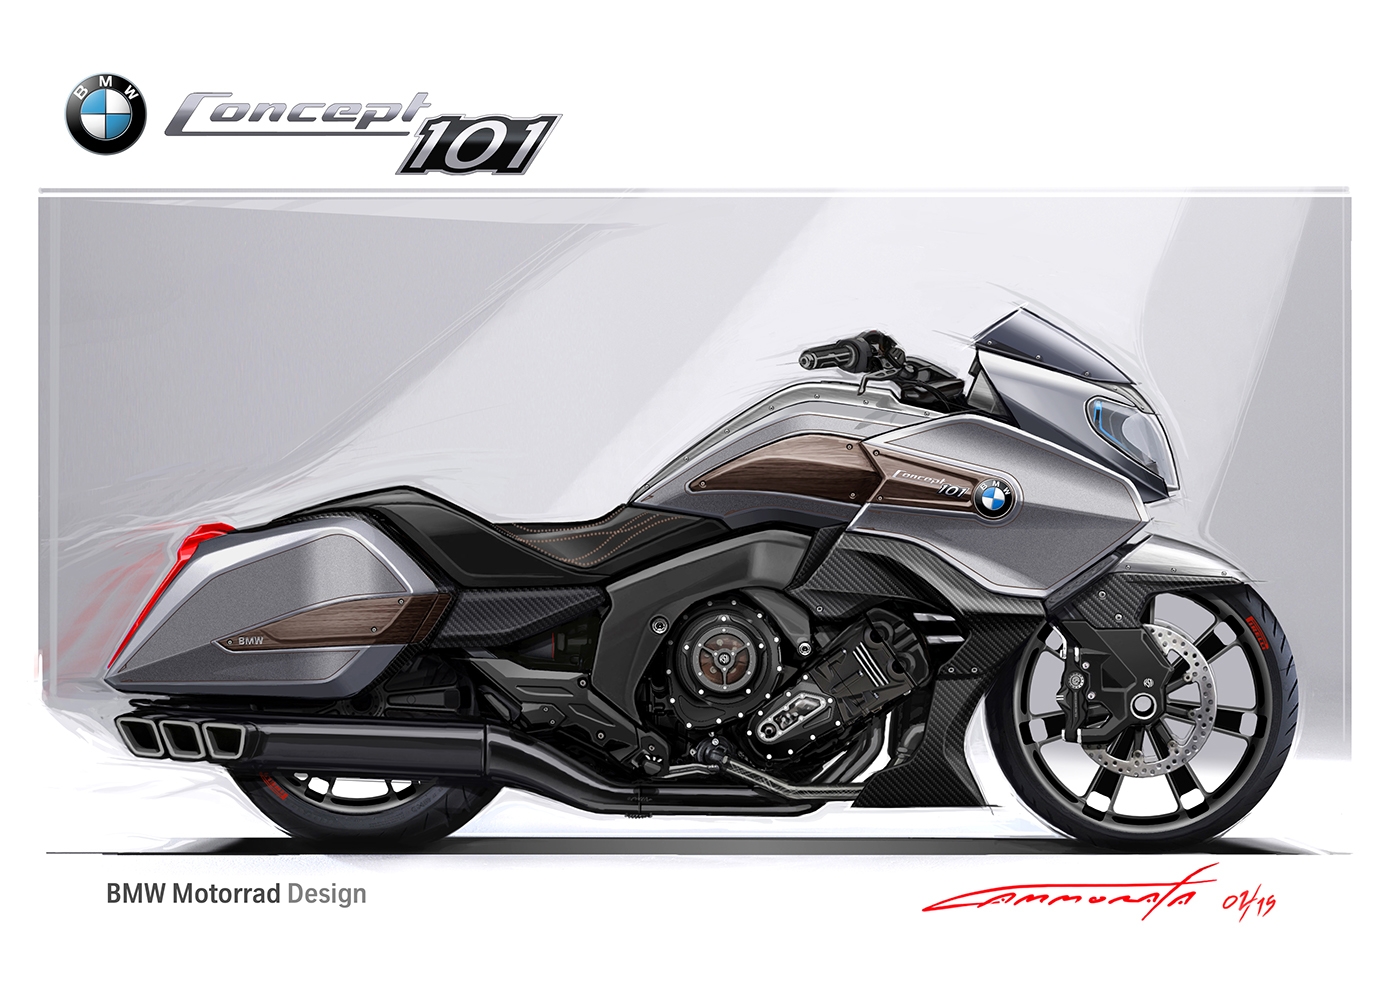 Bmw Concept 101 宝马101概念摩托车设计 手机移动版